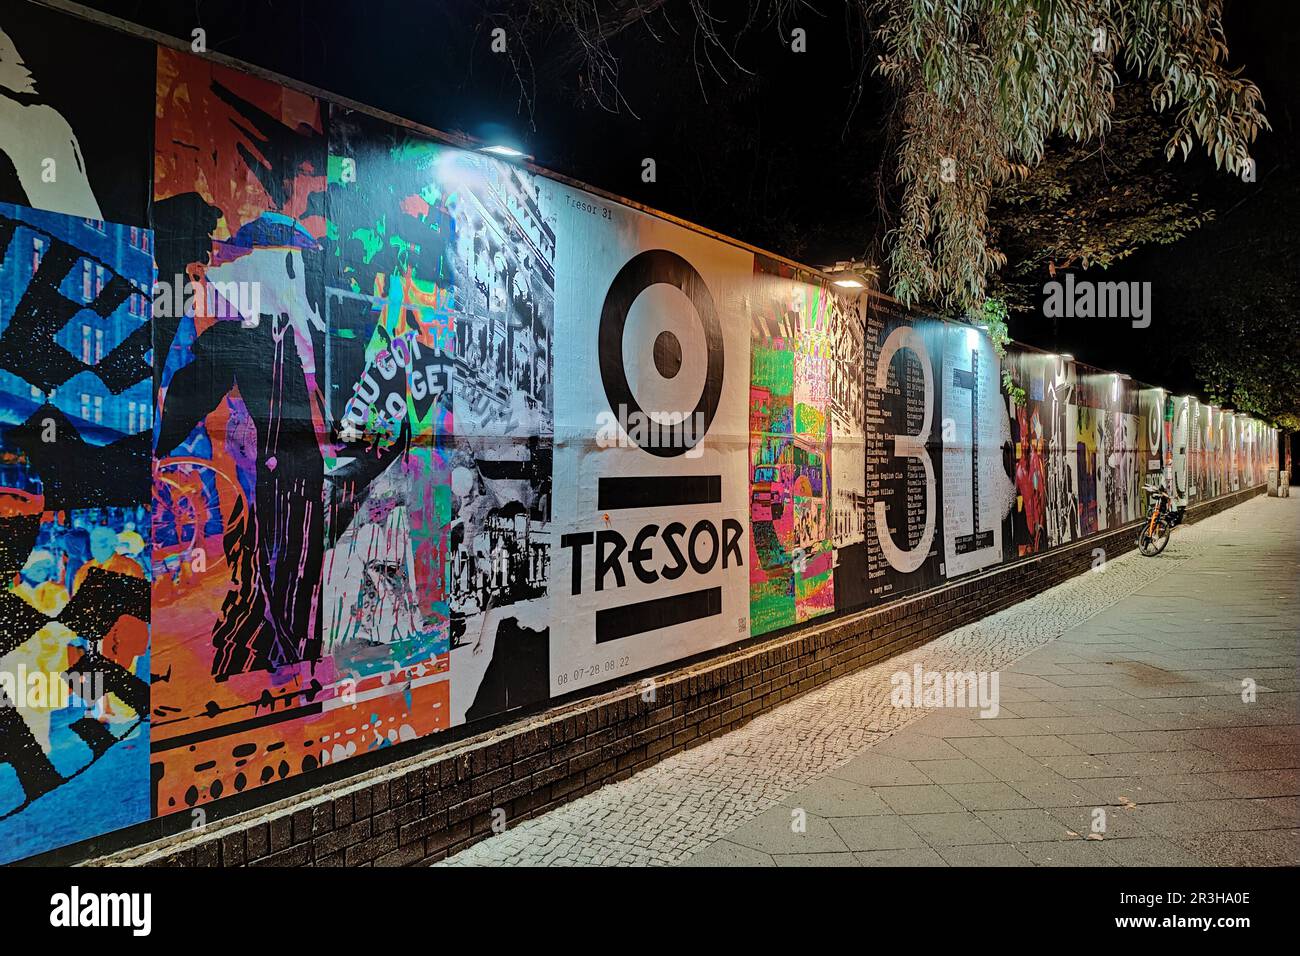 Illuminated wall at Tresor techno club at night, Koepenicker Strasse, Berlin, Germany, Europe Stock Photo